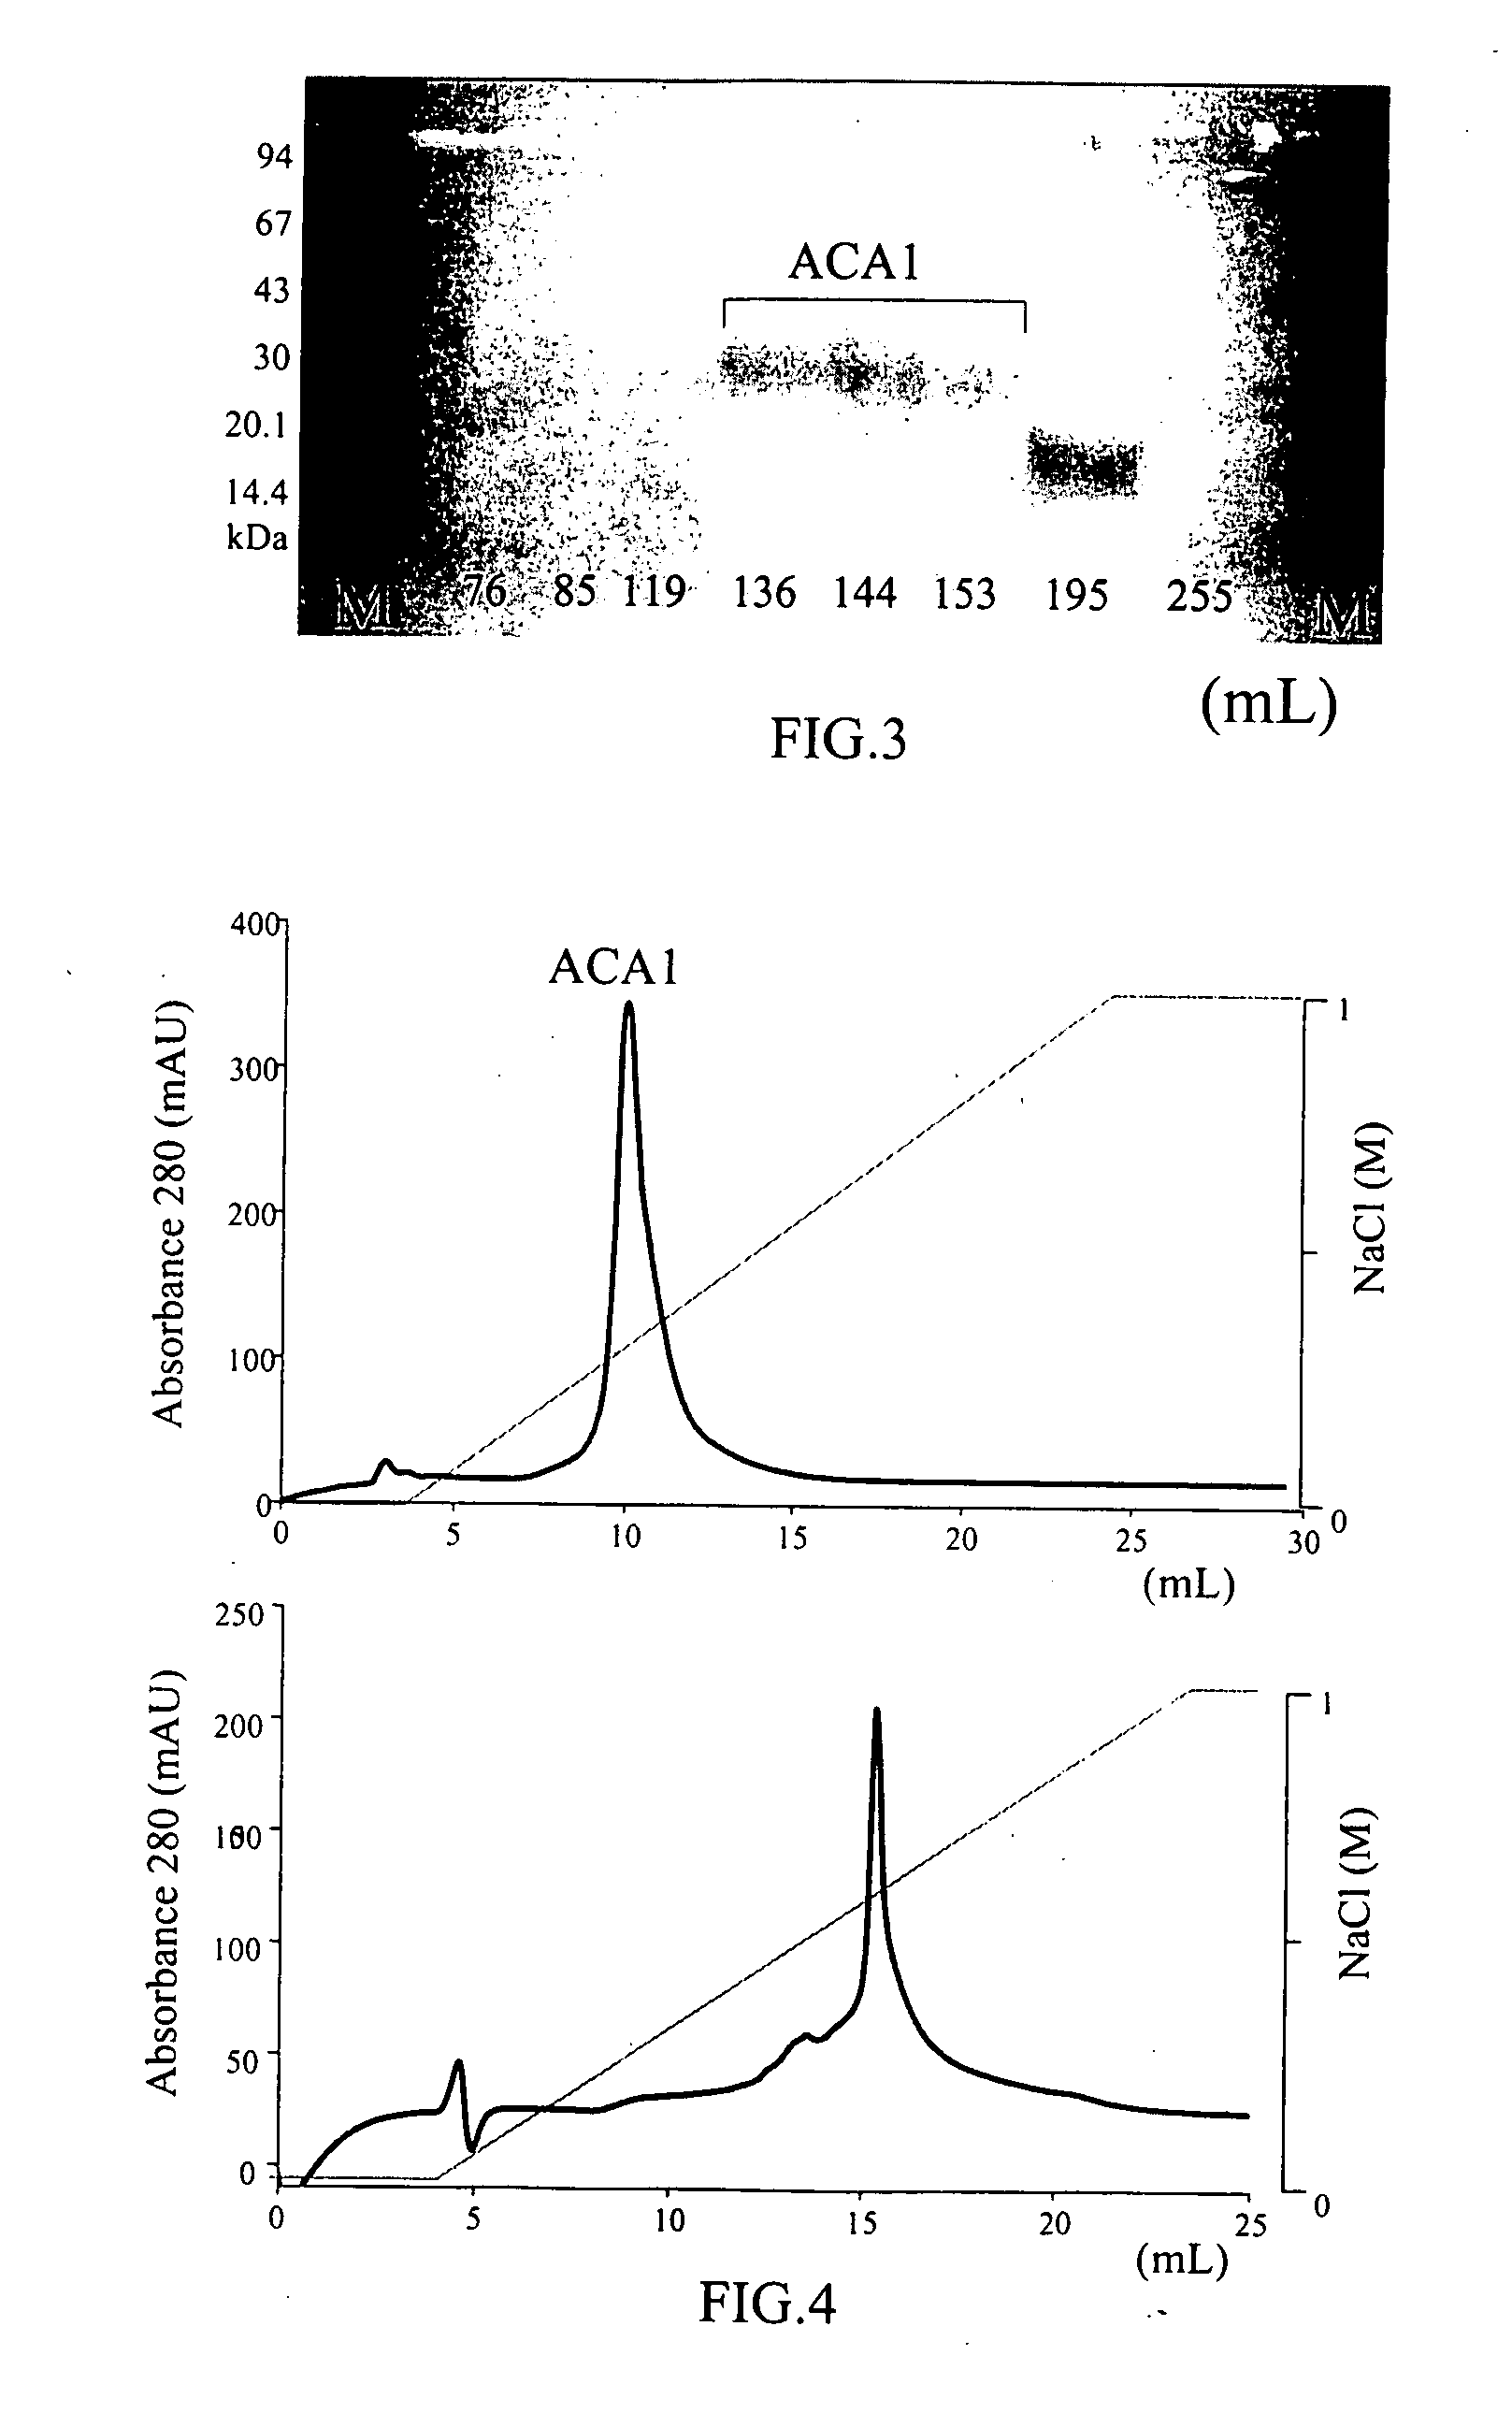 Protein ACA1 of antrodia camphorata